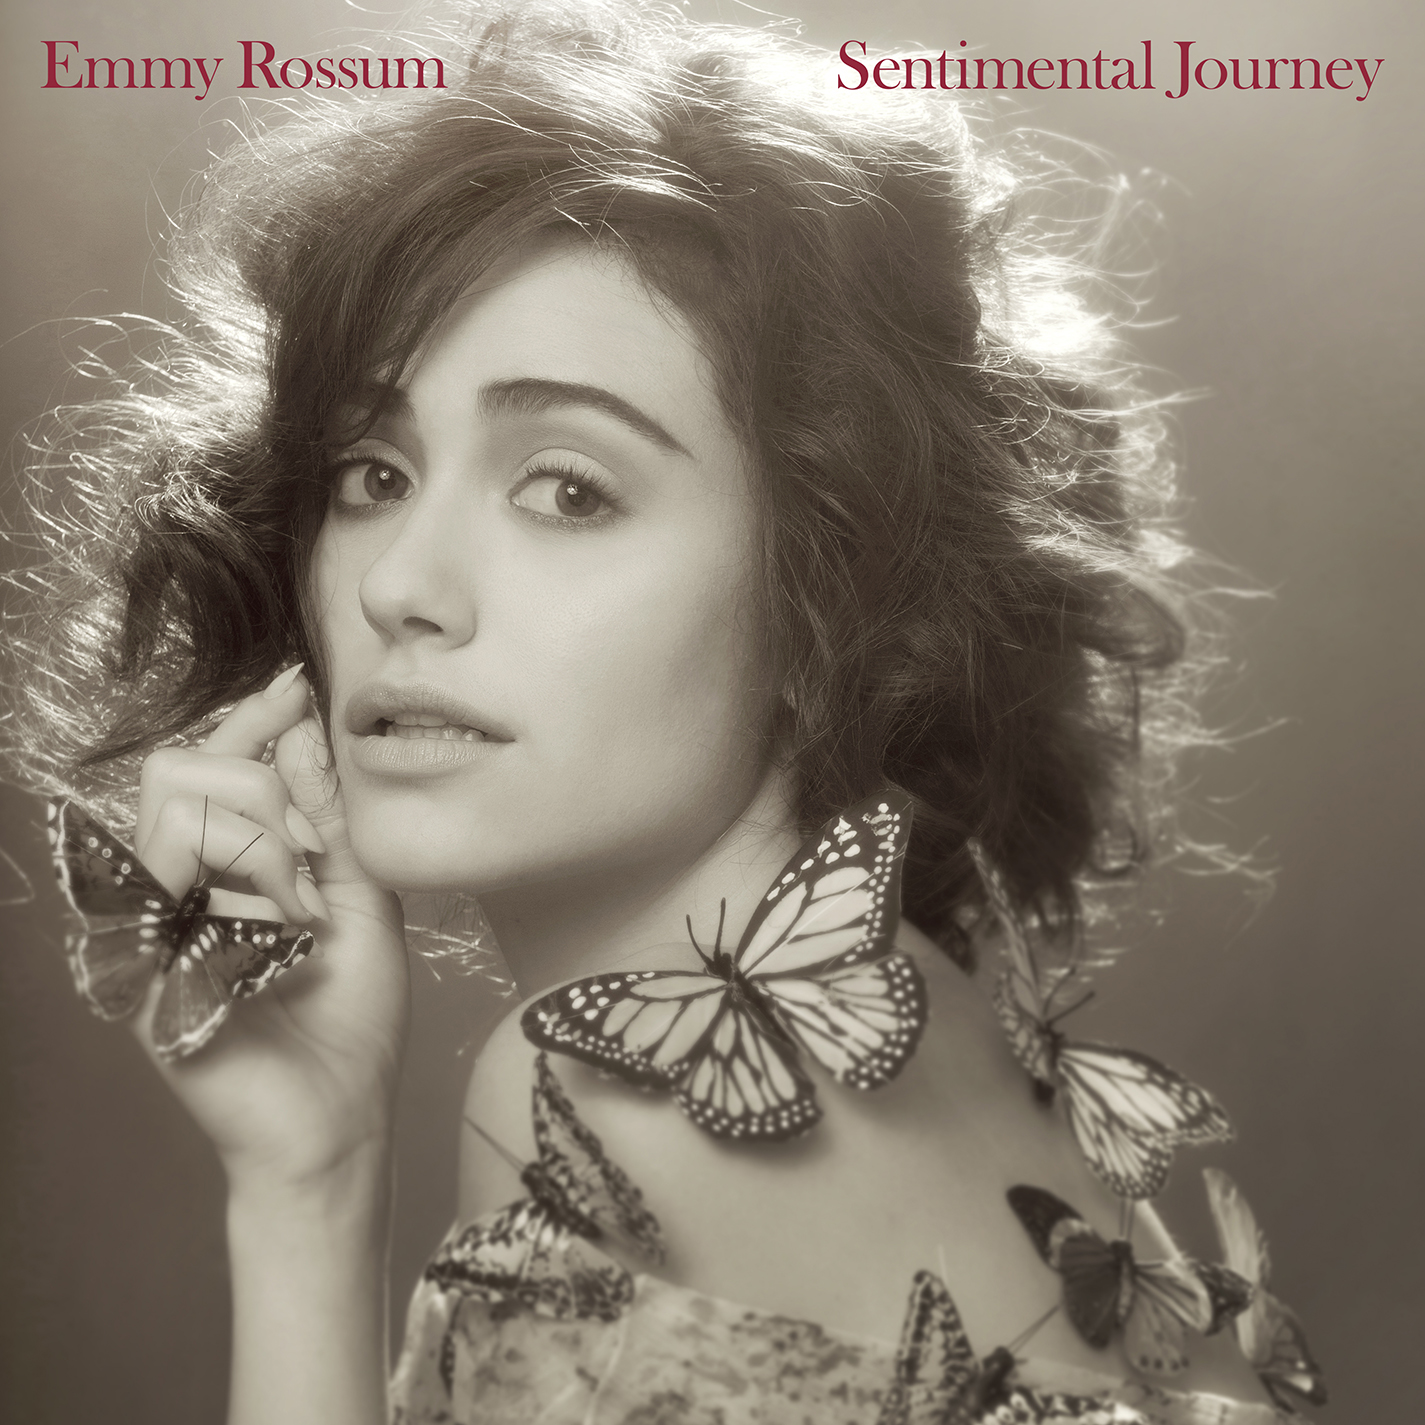 Emmy Rossum “Sentimental Journey” Album & Review